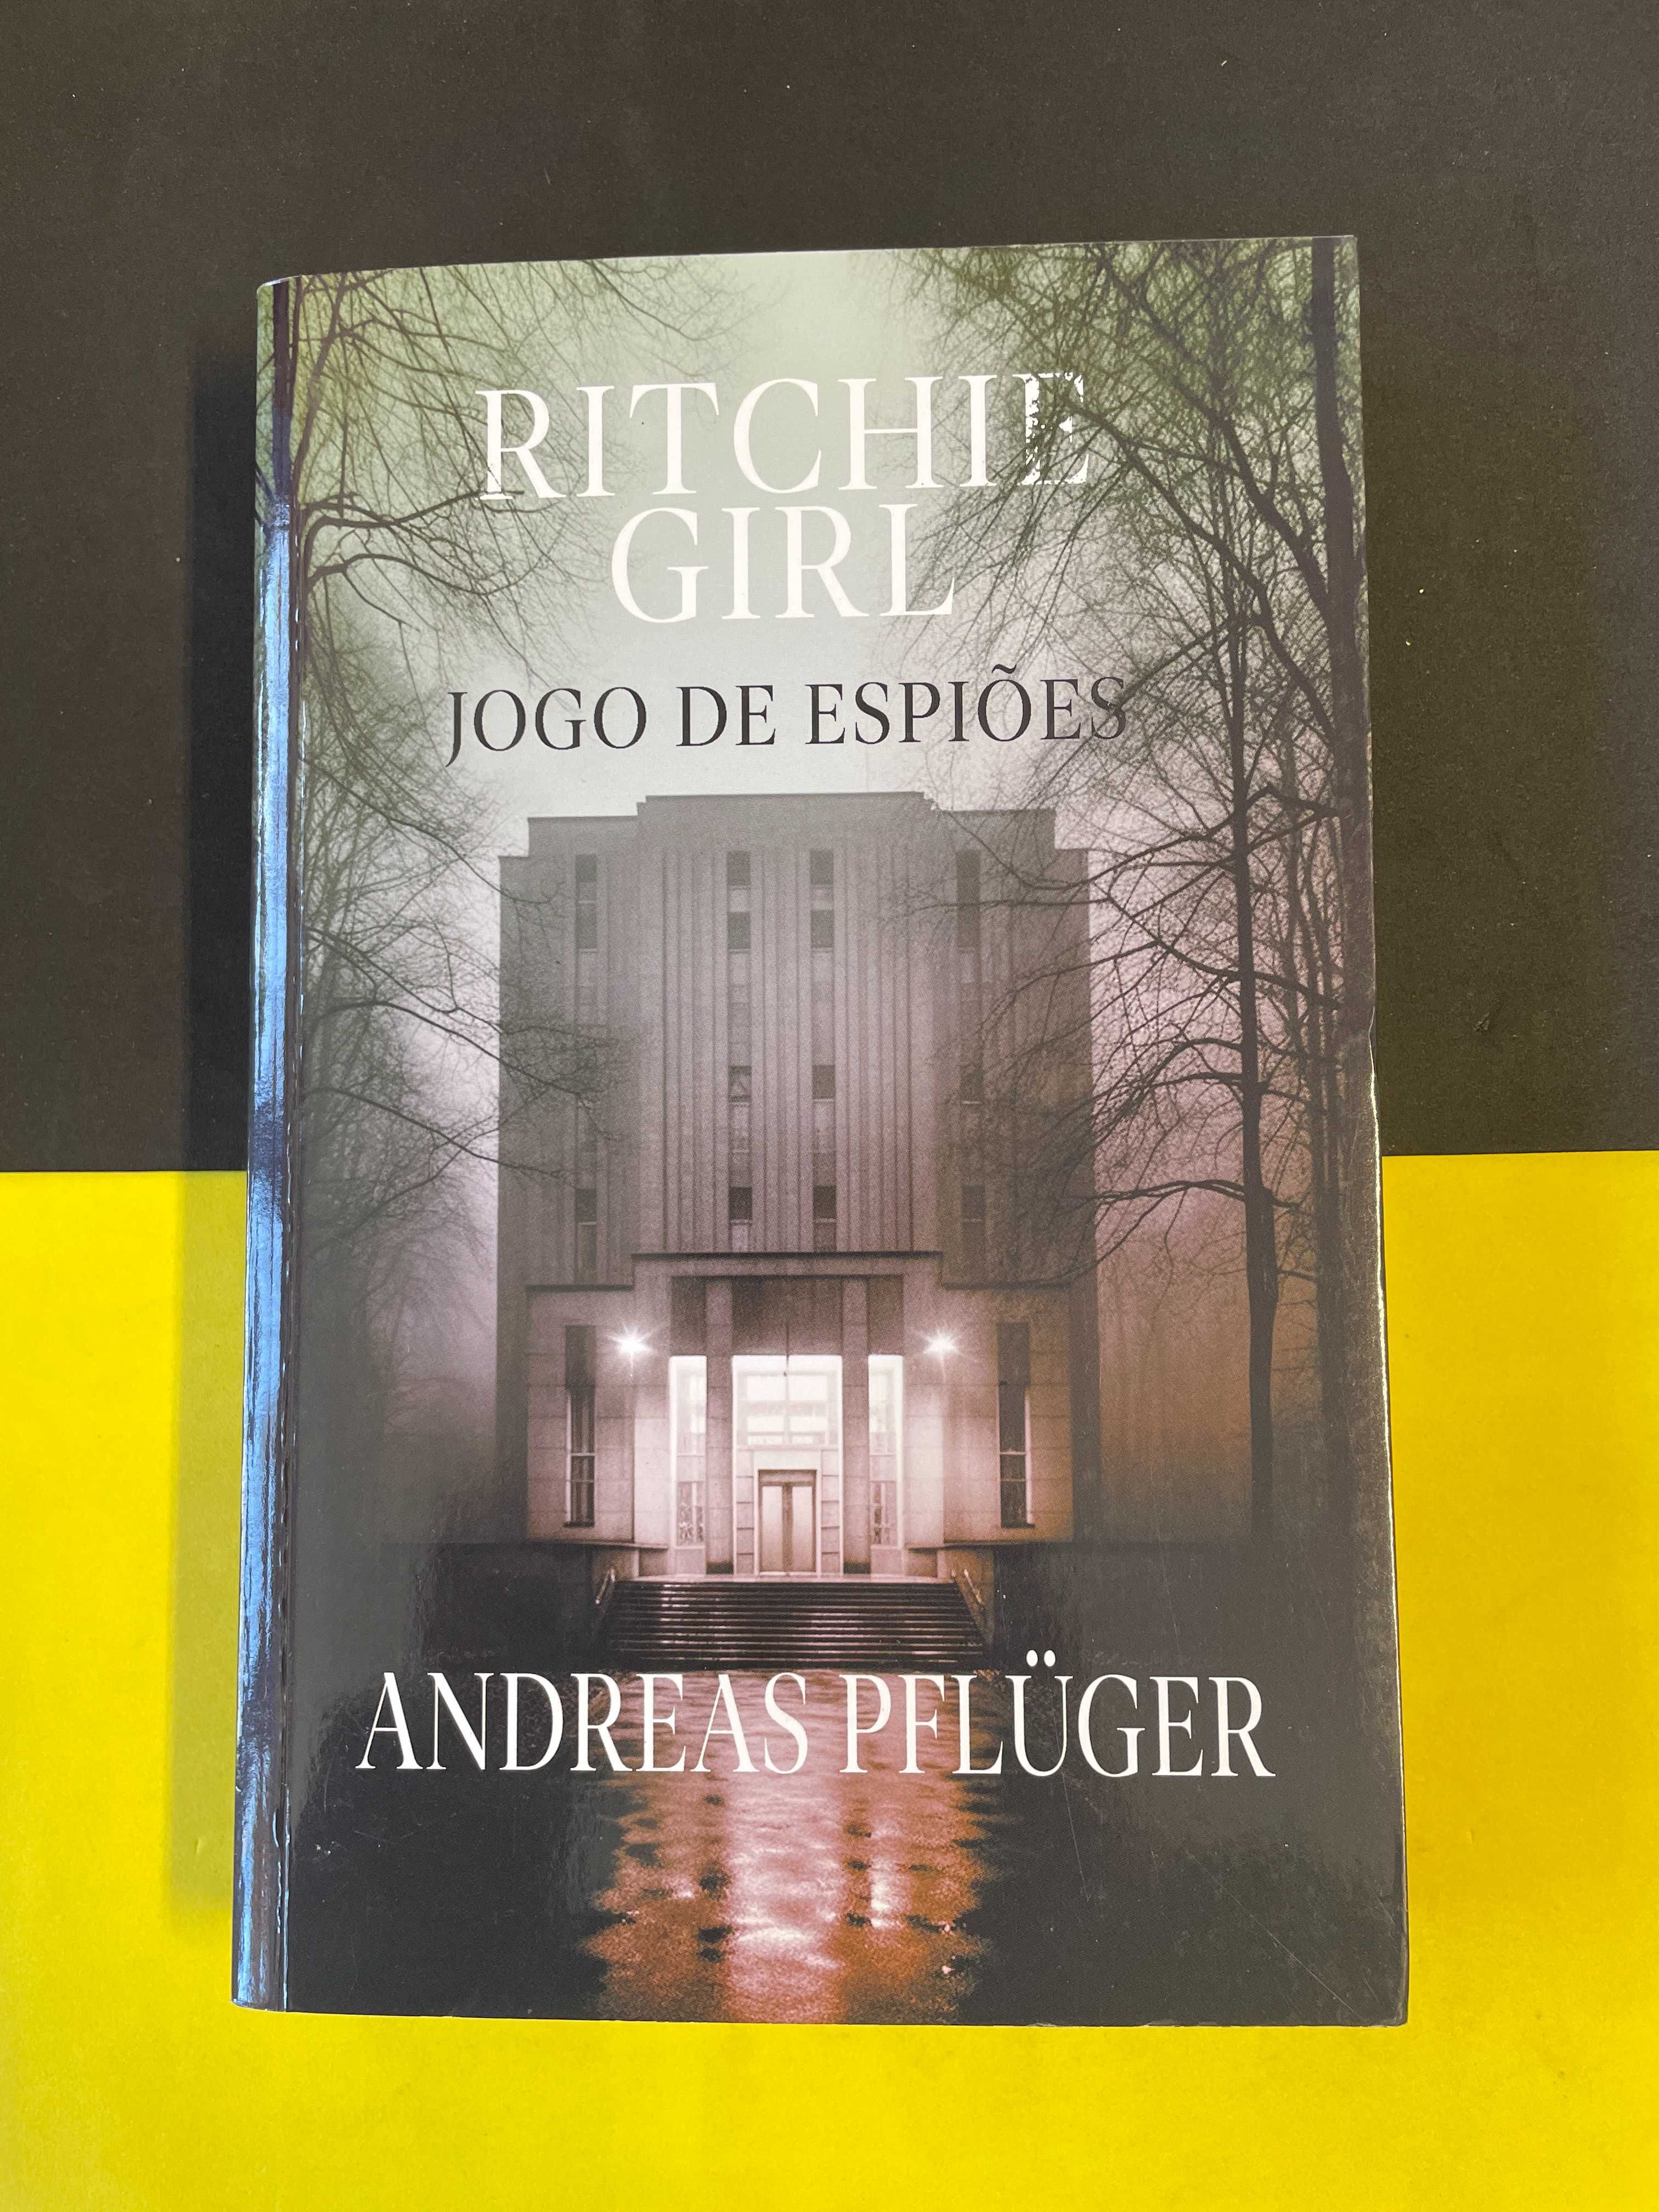 Andreas Pfluger - Ritchie girl: Jogo de espiões